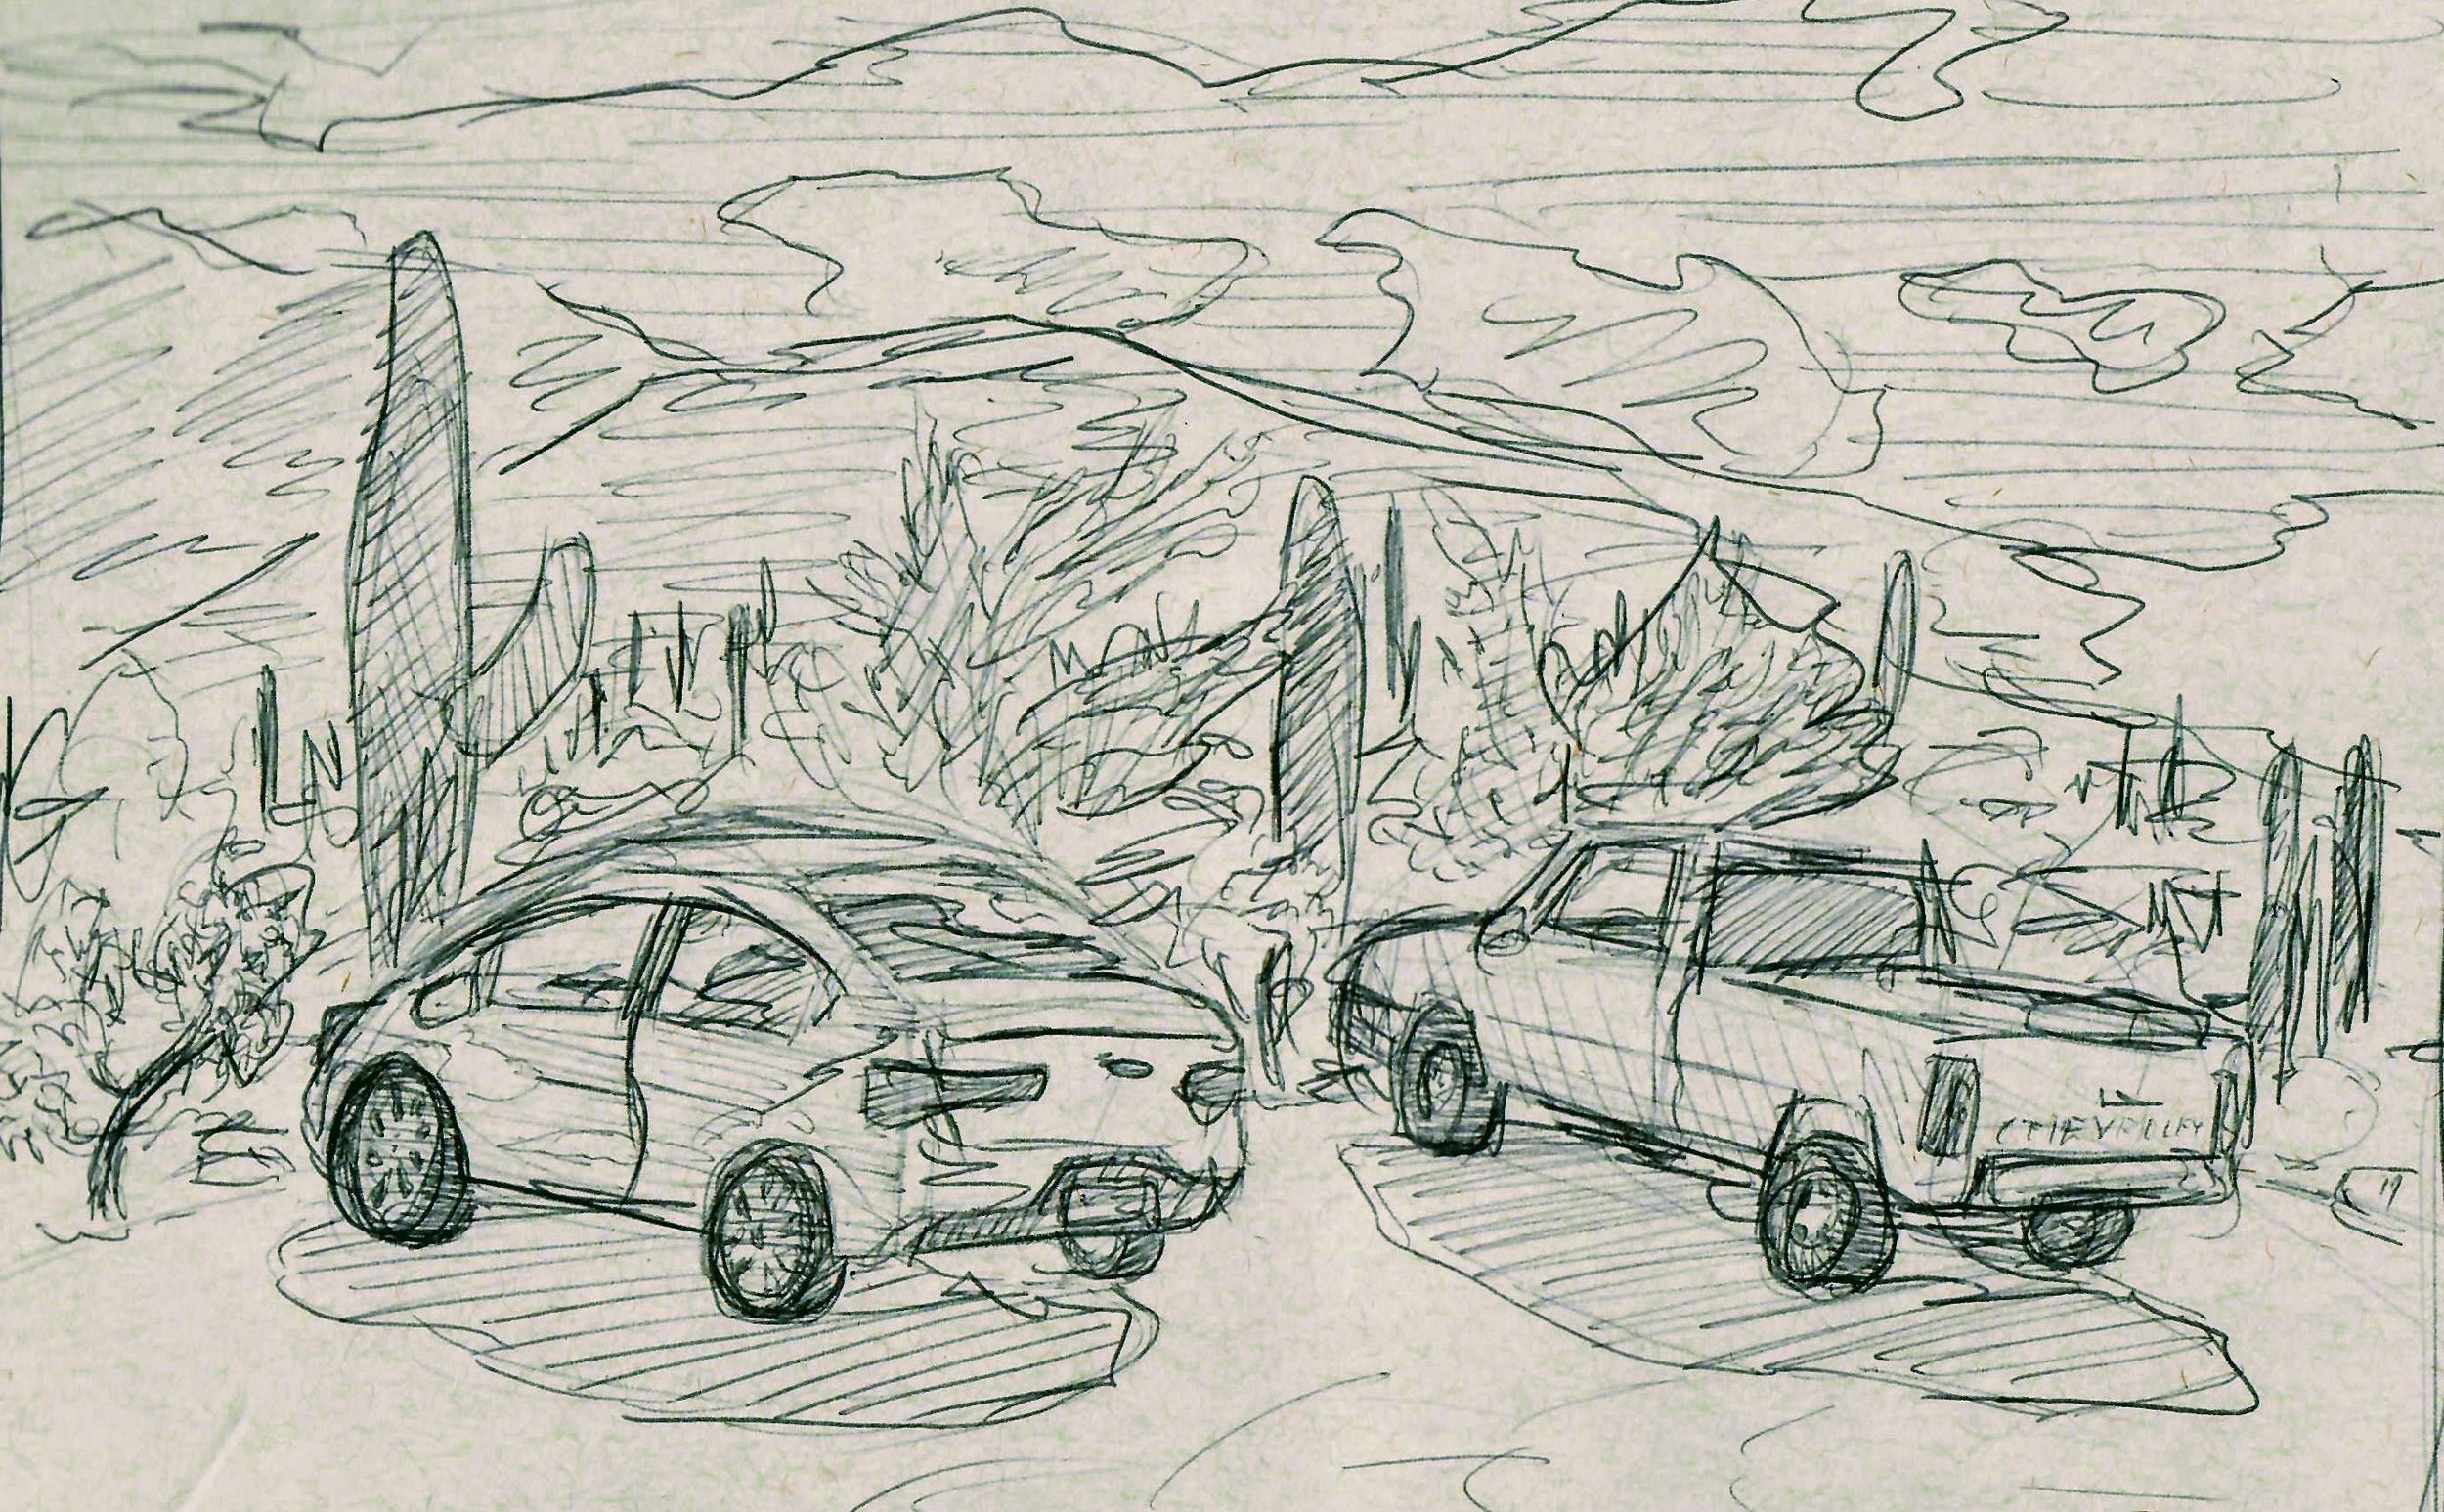 Arrizona parking lot illustration